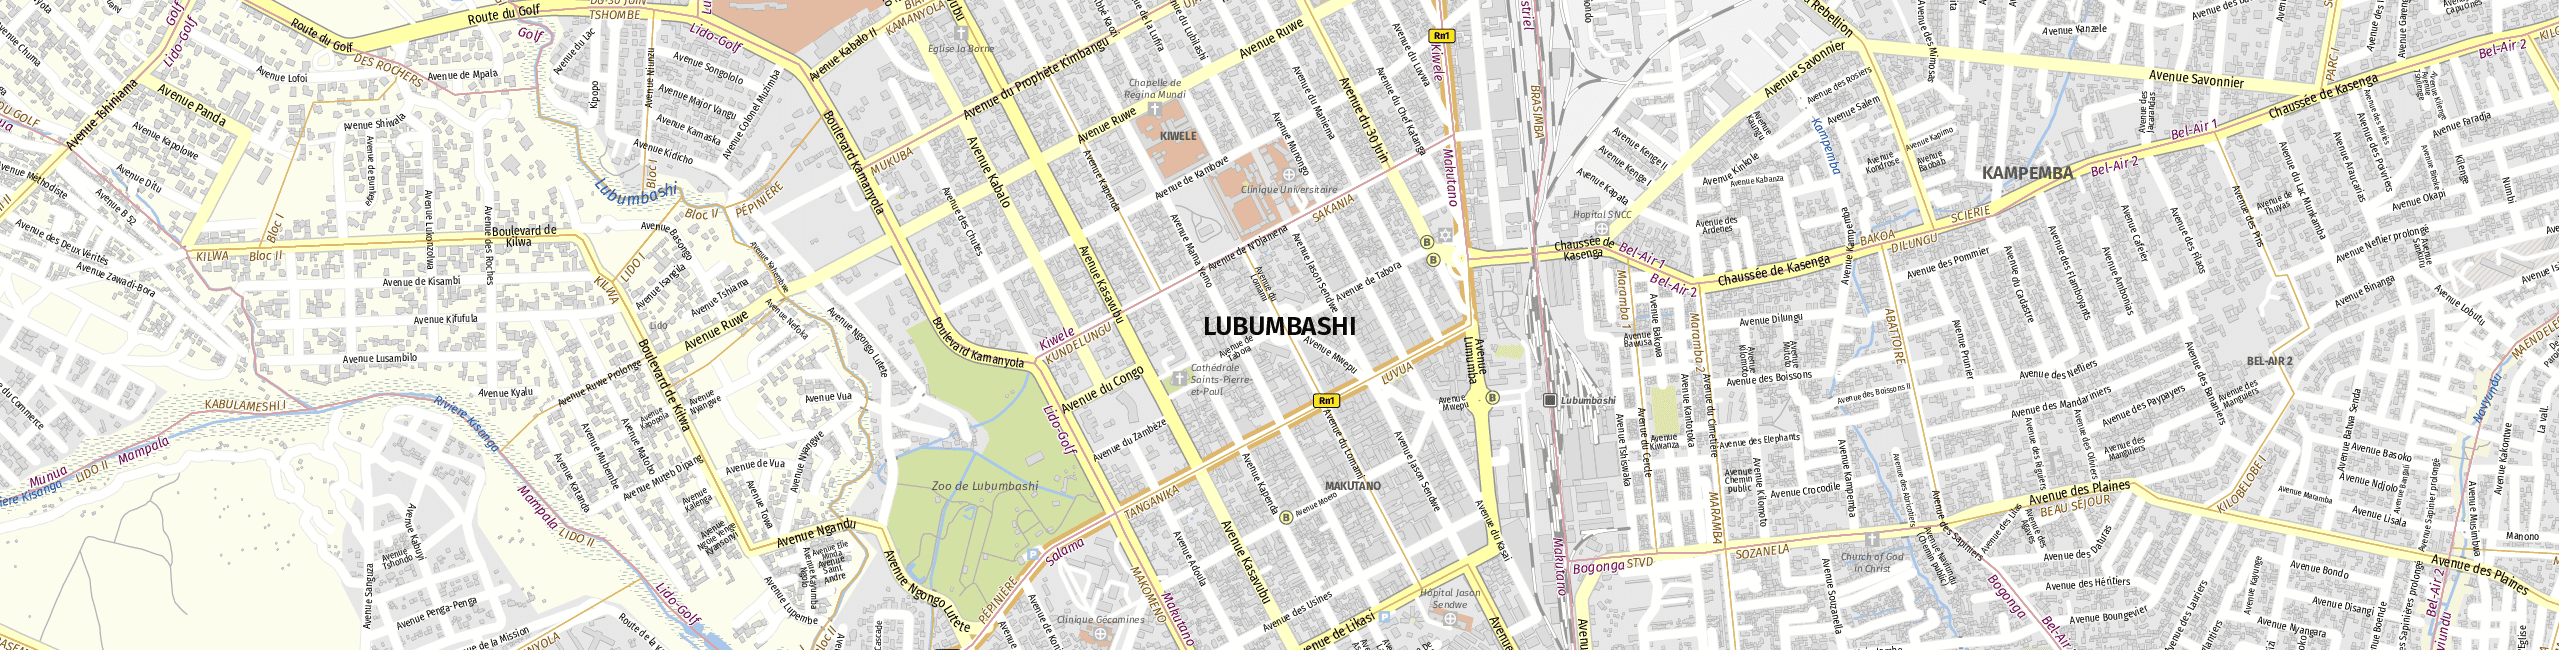 Stadtplan Lubumbashi zum Downloaden.